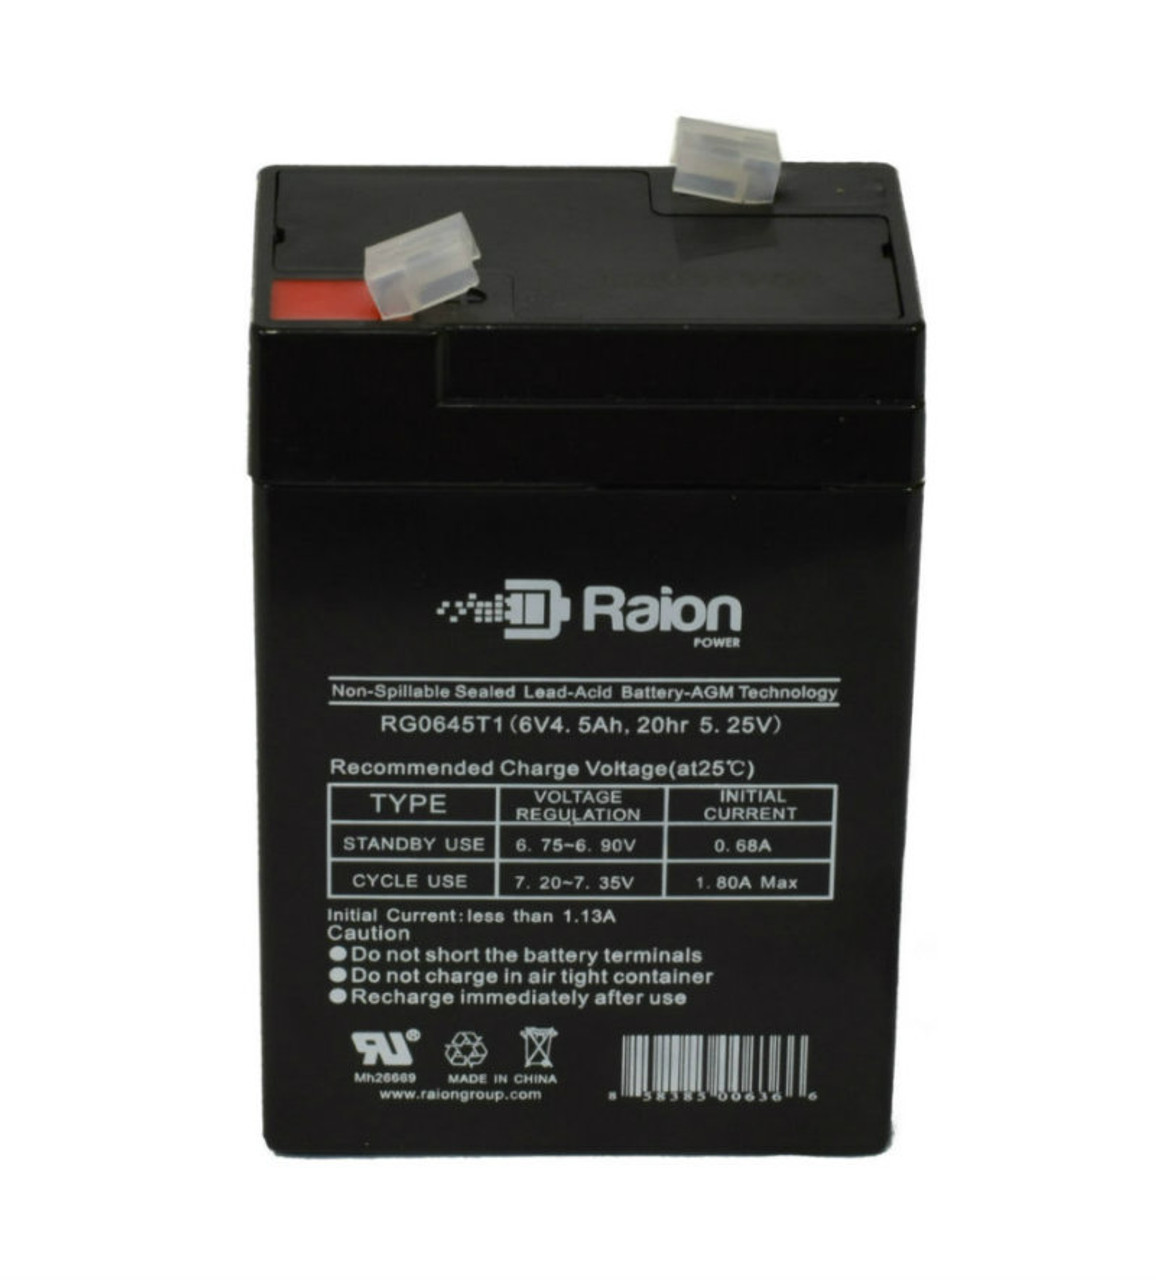 Raion Power RG0645T1 Replacement Battery Cartridge for Picker International Model 502